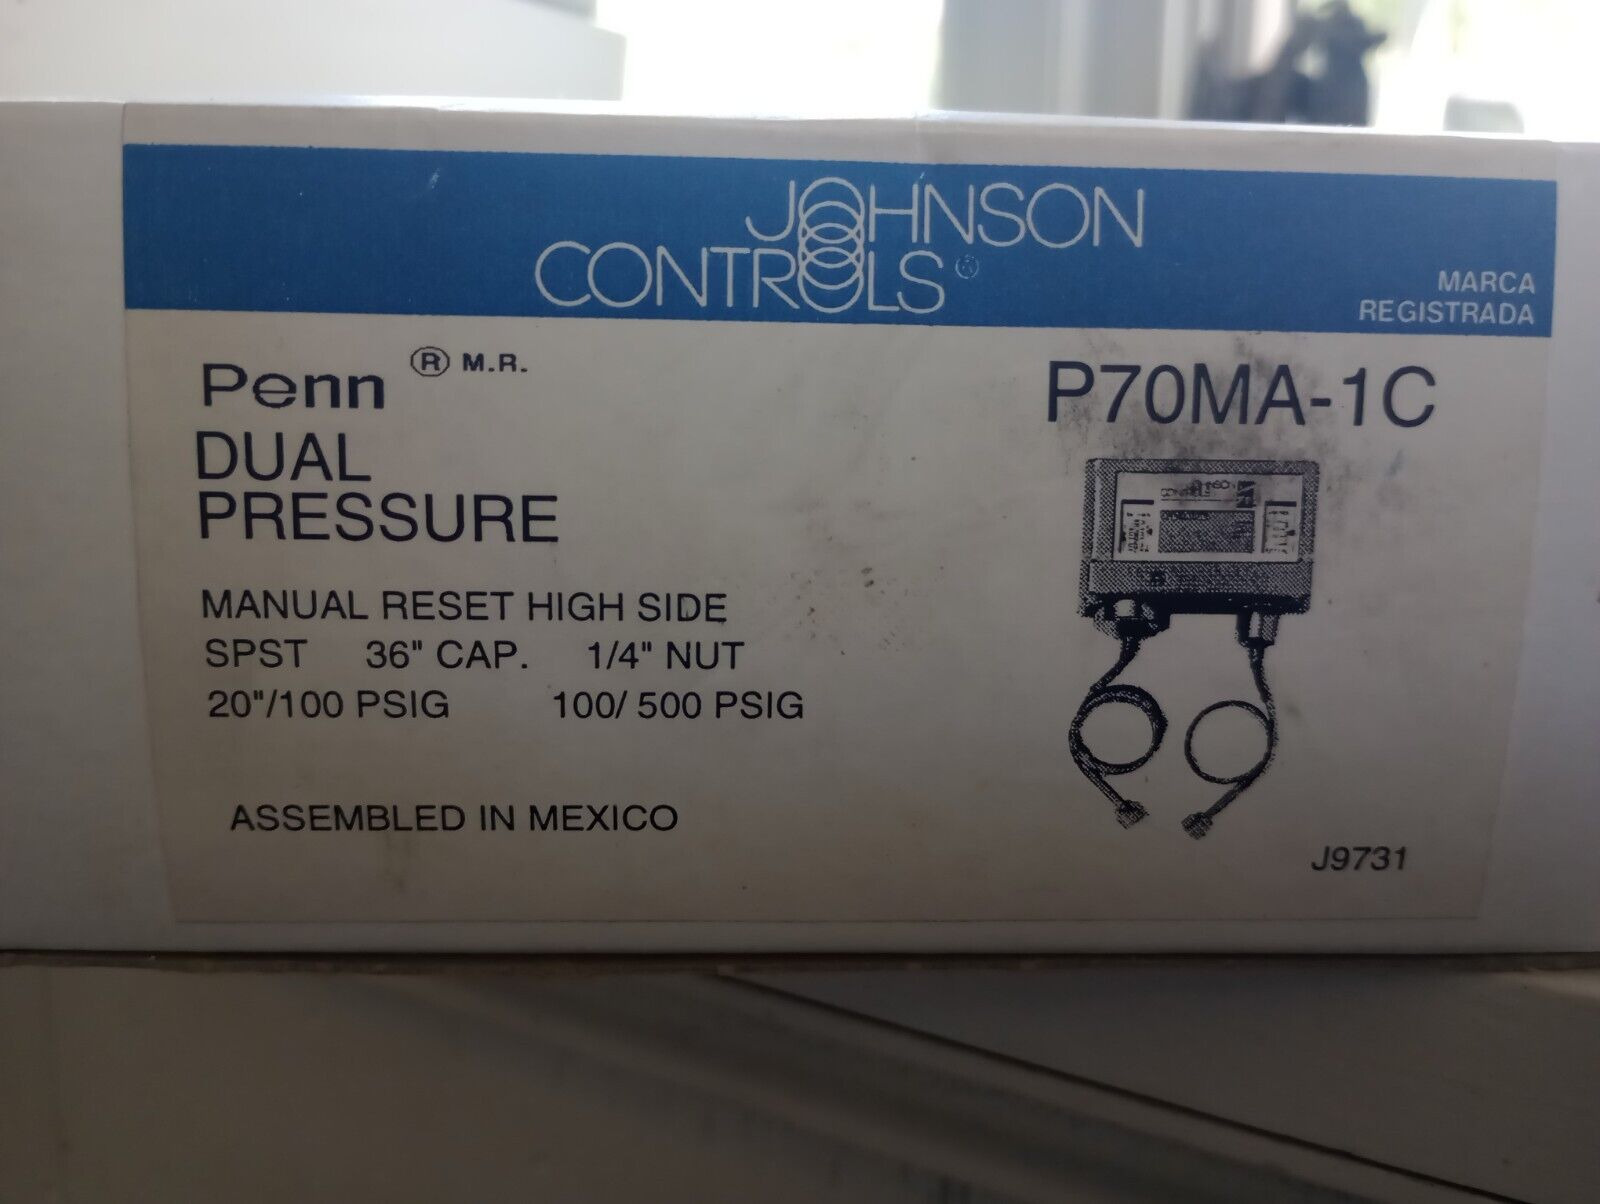 Johnson Controls P70MA-1C dual pressure